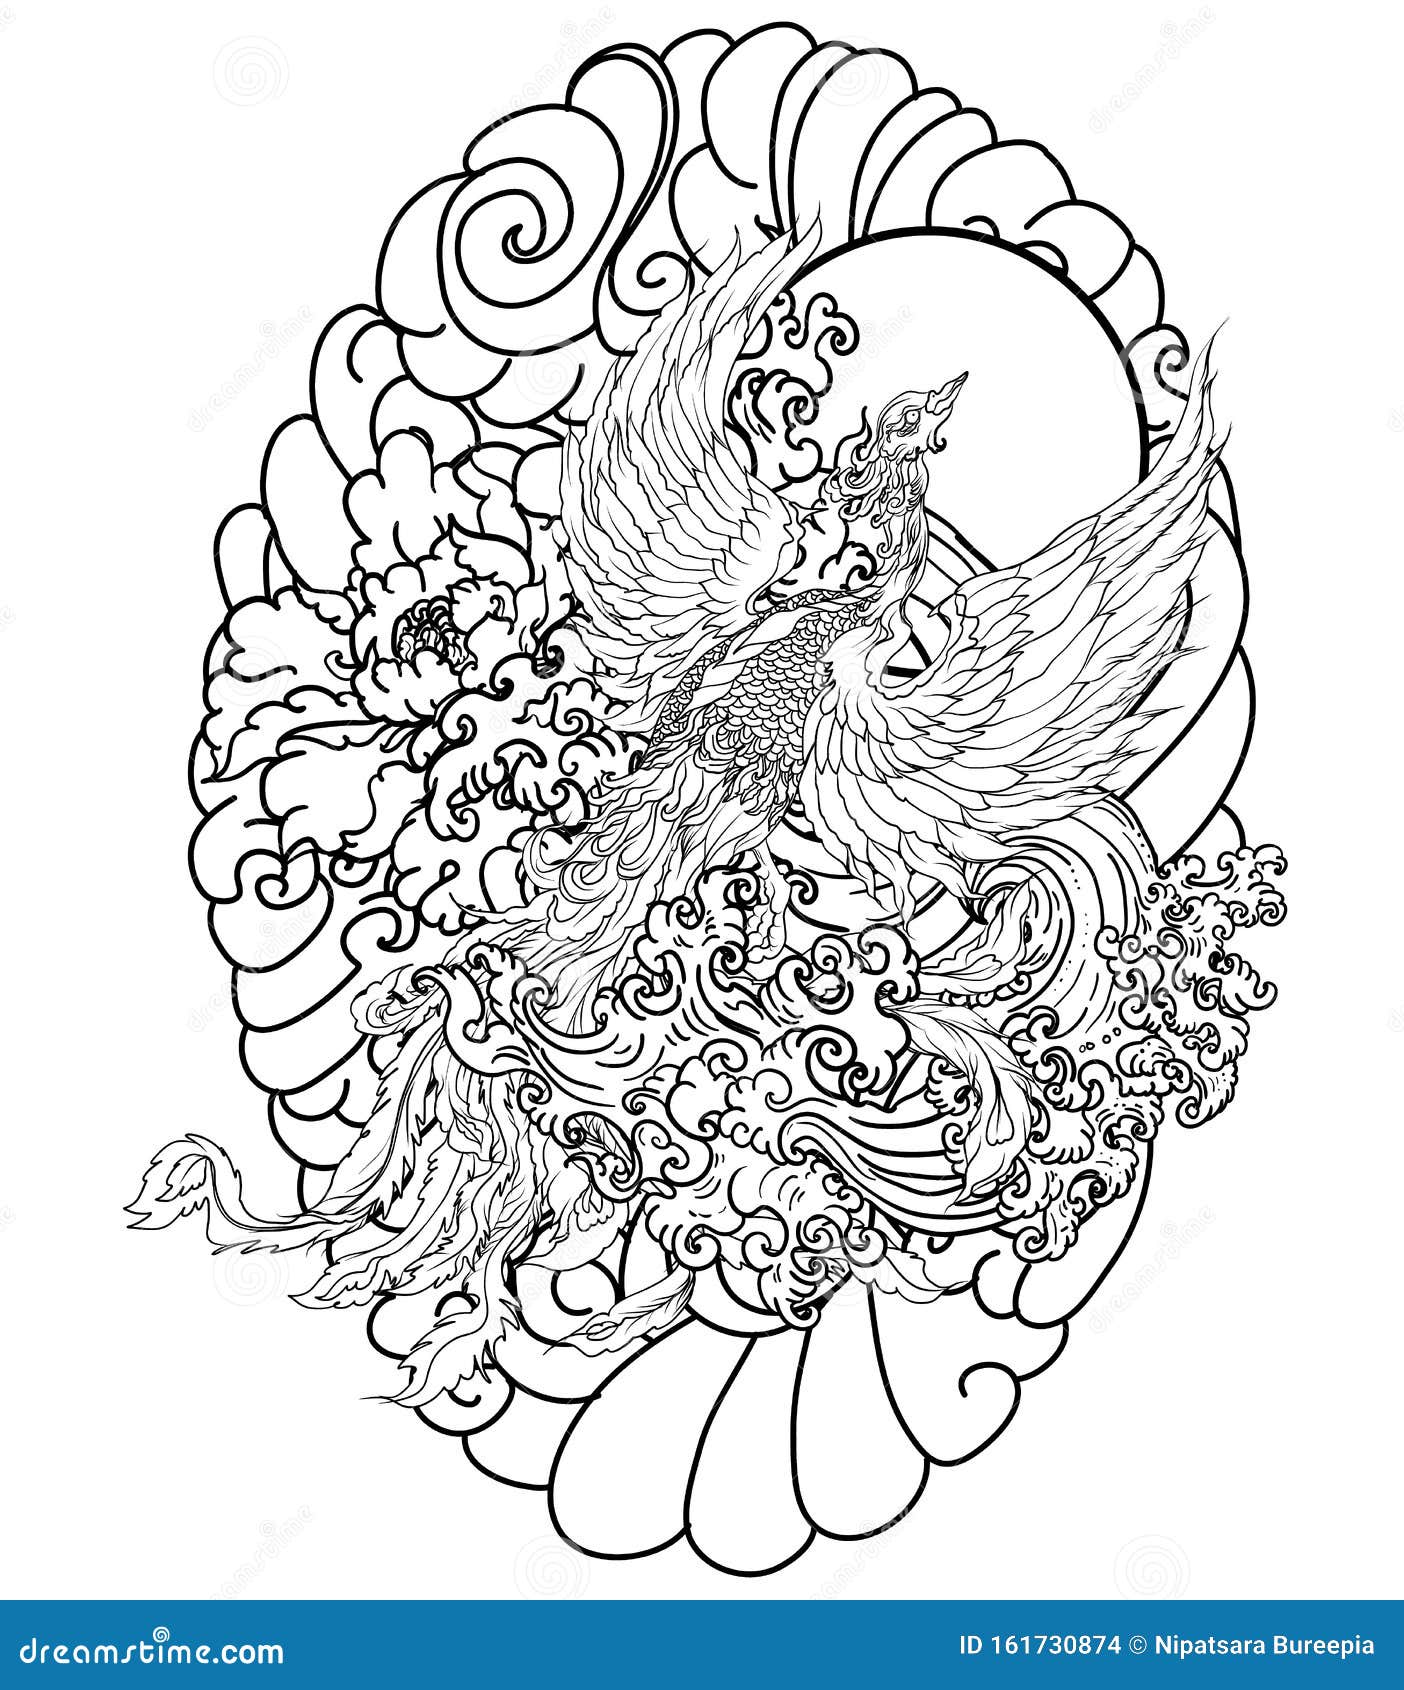 Japanese Peacock Tattoo Asian Phoenix Fire Bird Tattoo Design Colorful Phoenix Fire Bird Colouring Book Illustration Stock Vector Illustration Of Japanese Fuji